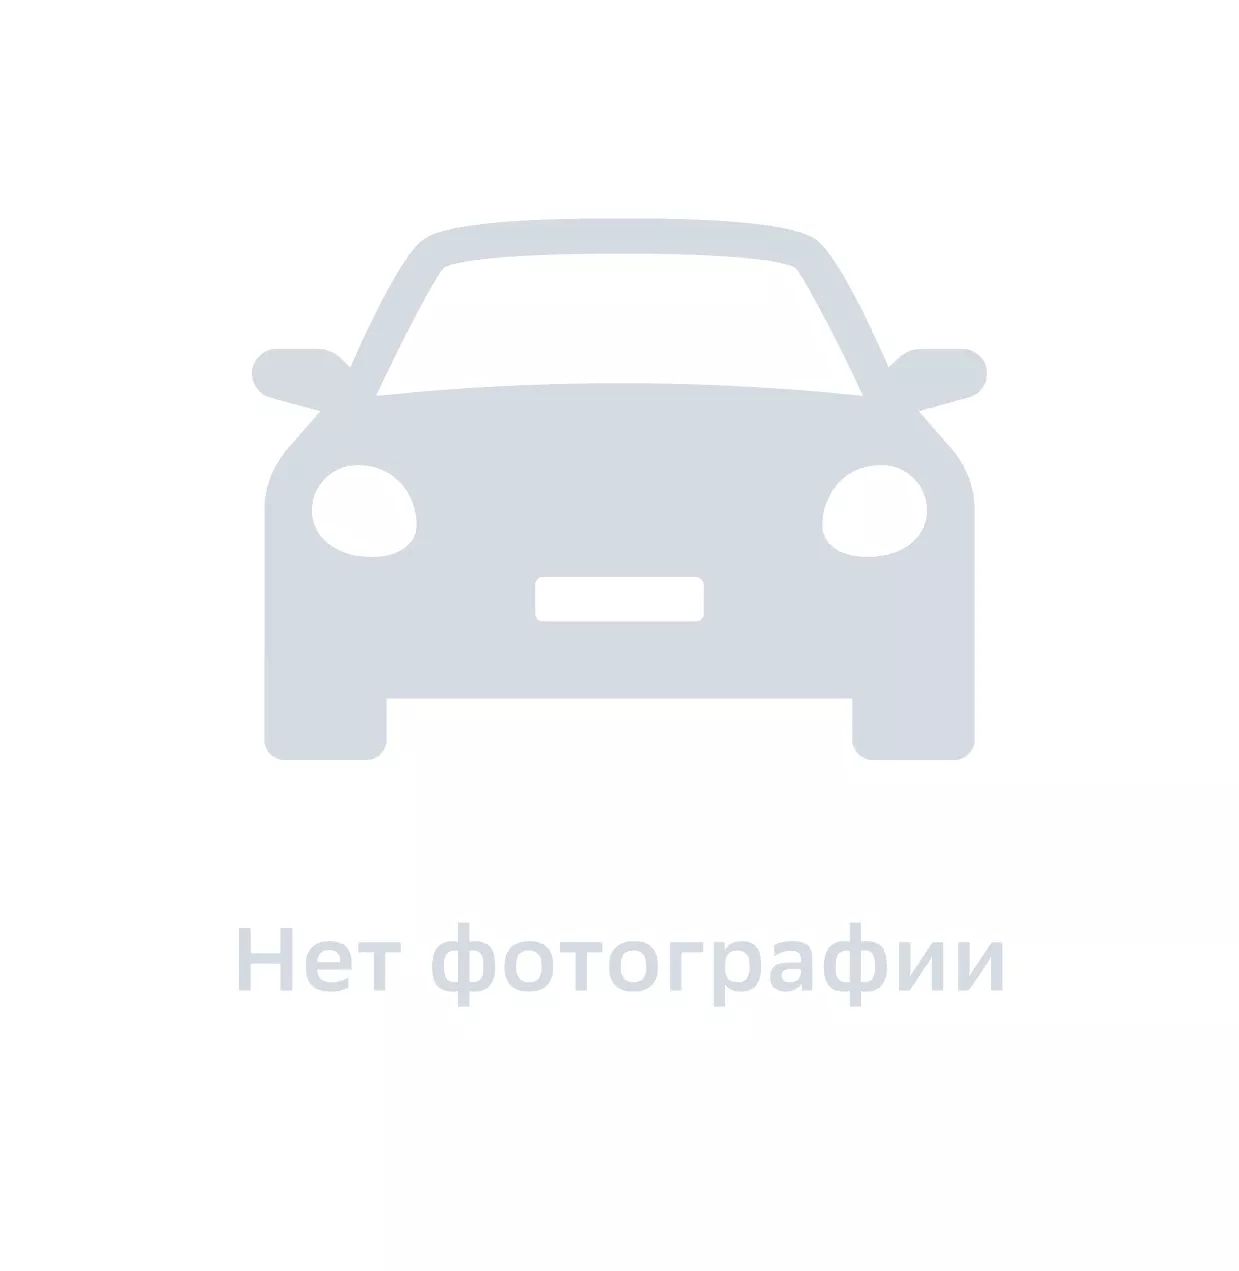 Ремкомплект тормоза, Hyundai-KIA, 5971038601